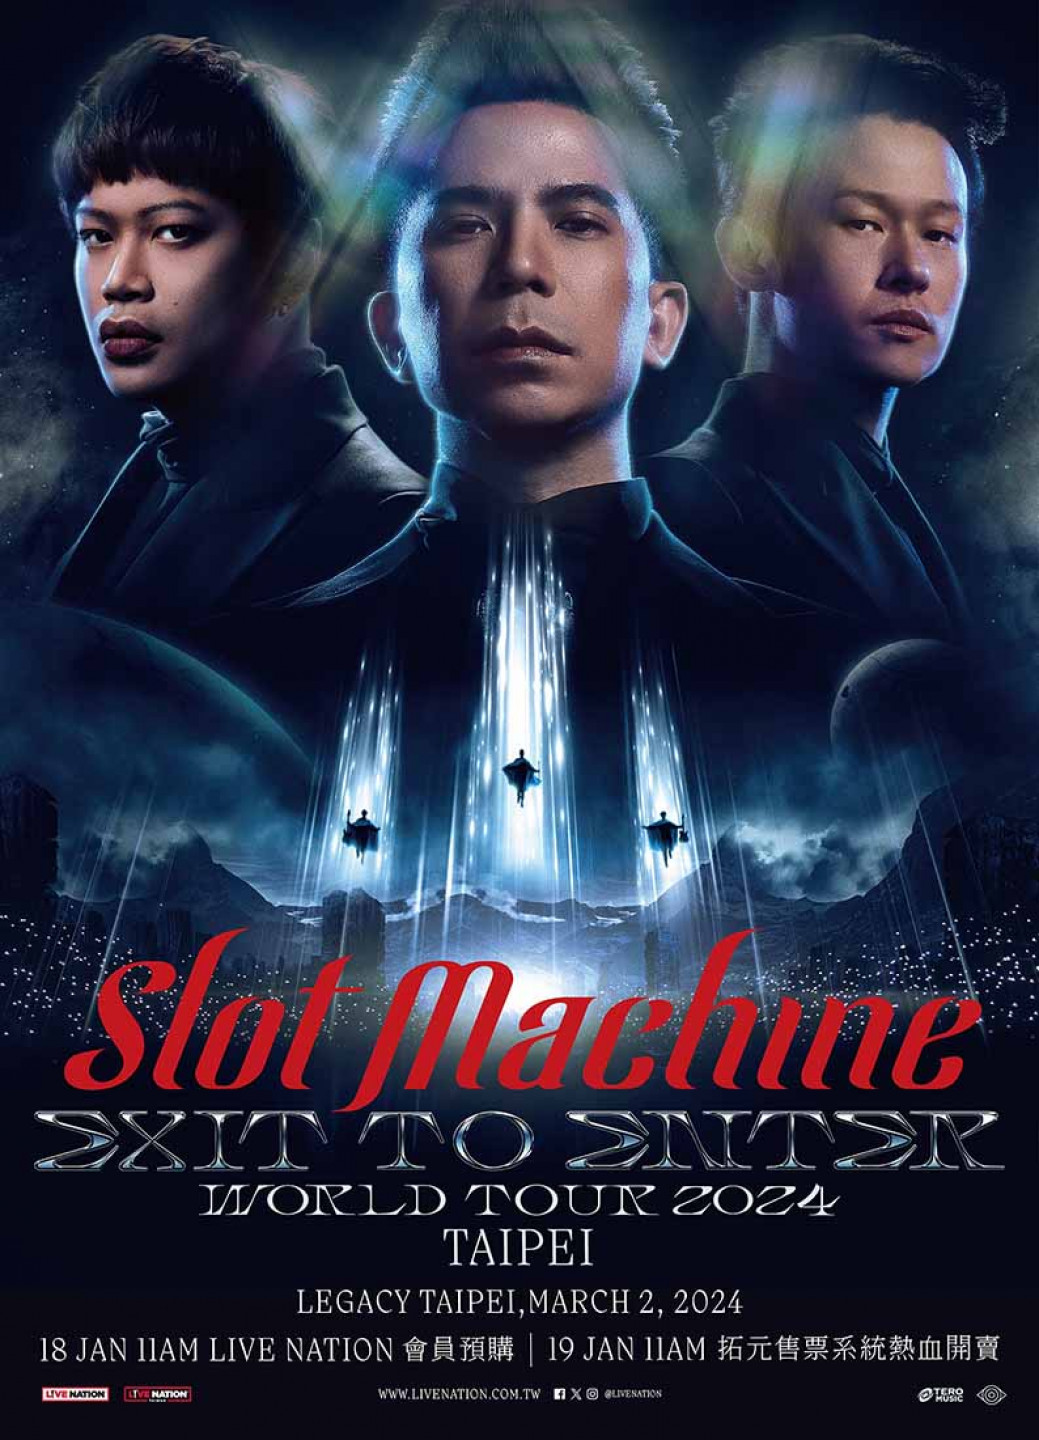 Slot Machine 海報主視覺 - Live Nation Taiwan 提供